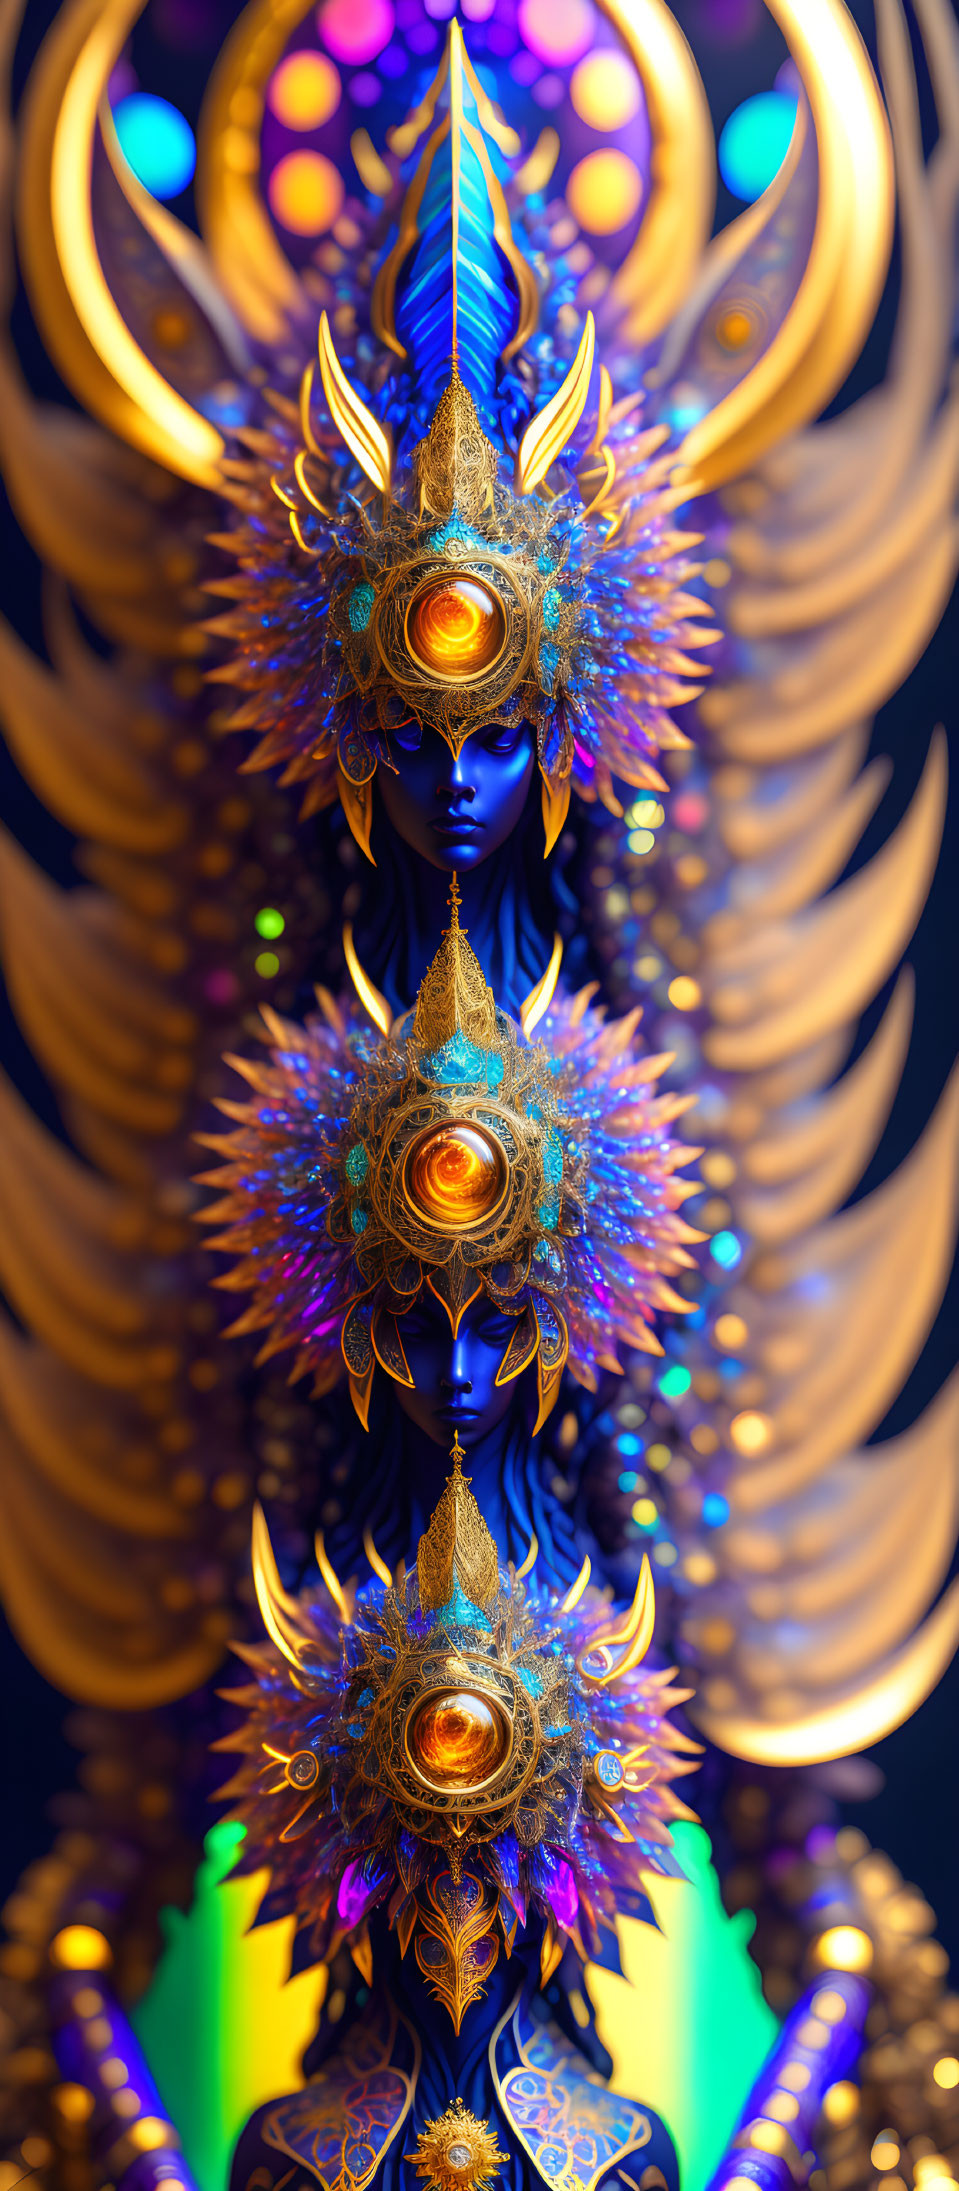 Intricate digital figure with golden headgear in a mandala setting